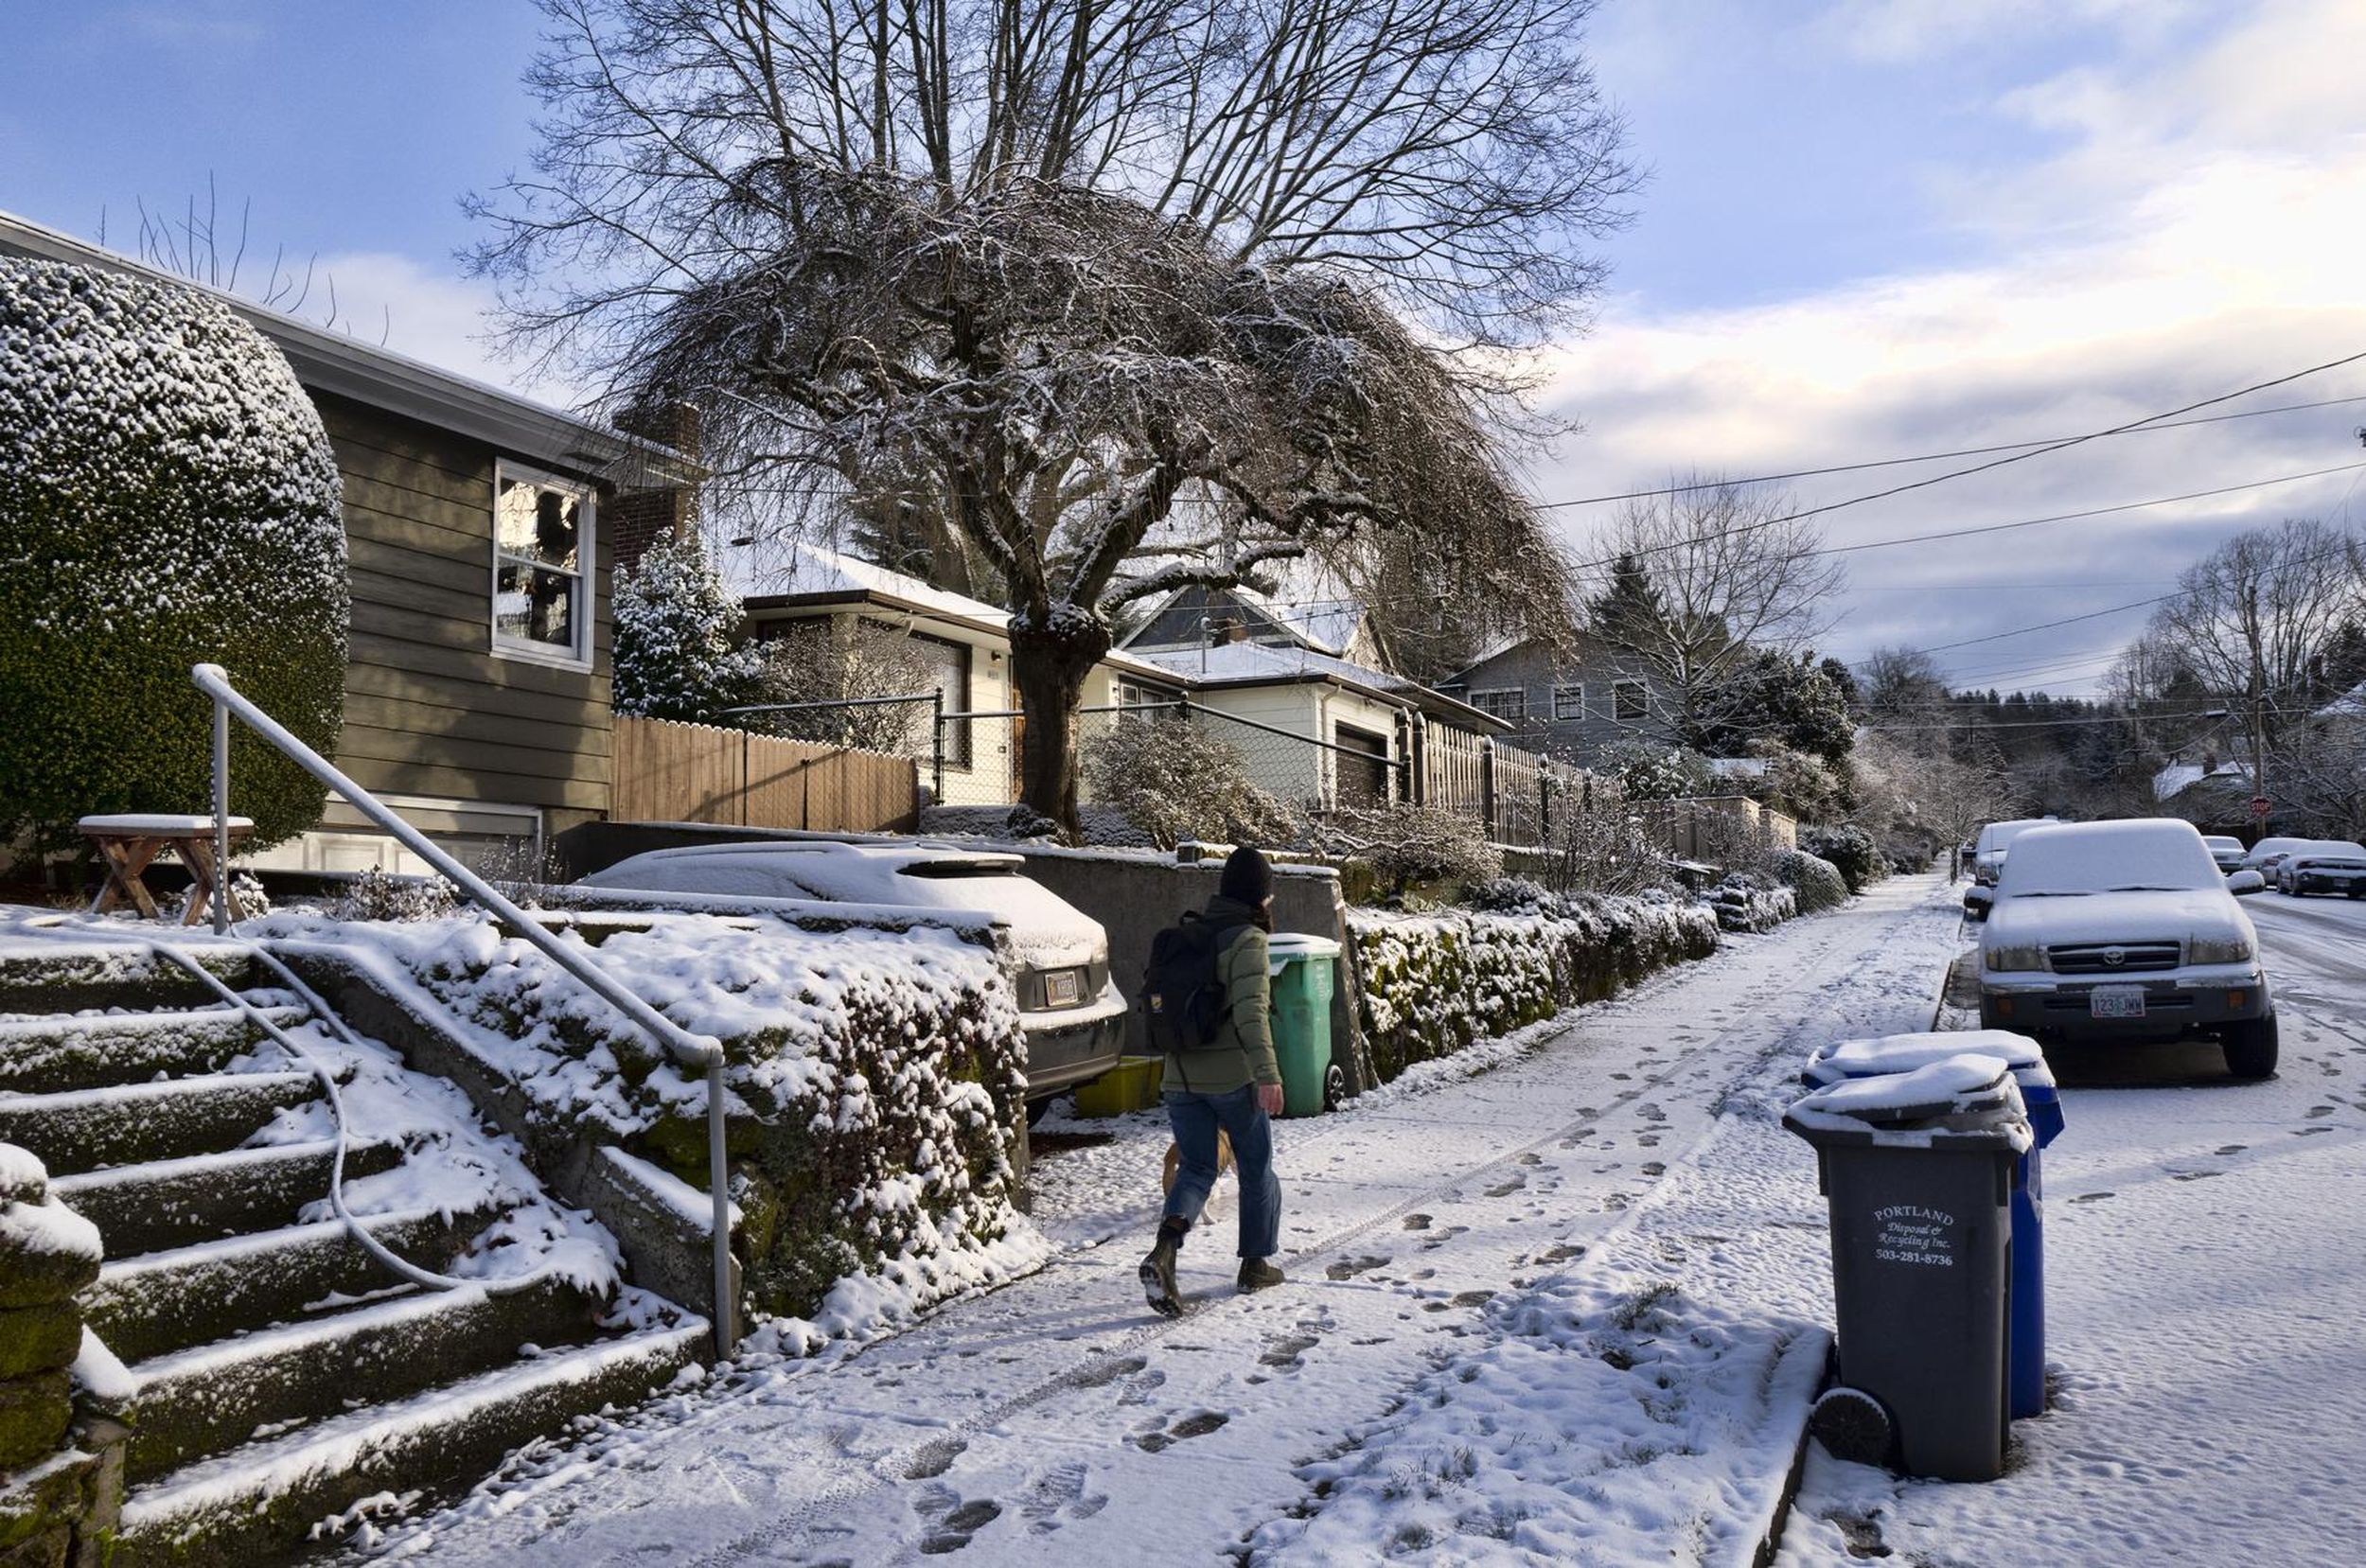 Winter storm delays school starts in parts of Northwest The Spokesman